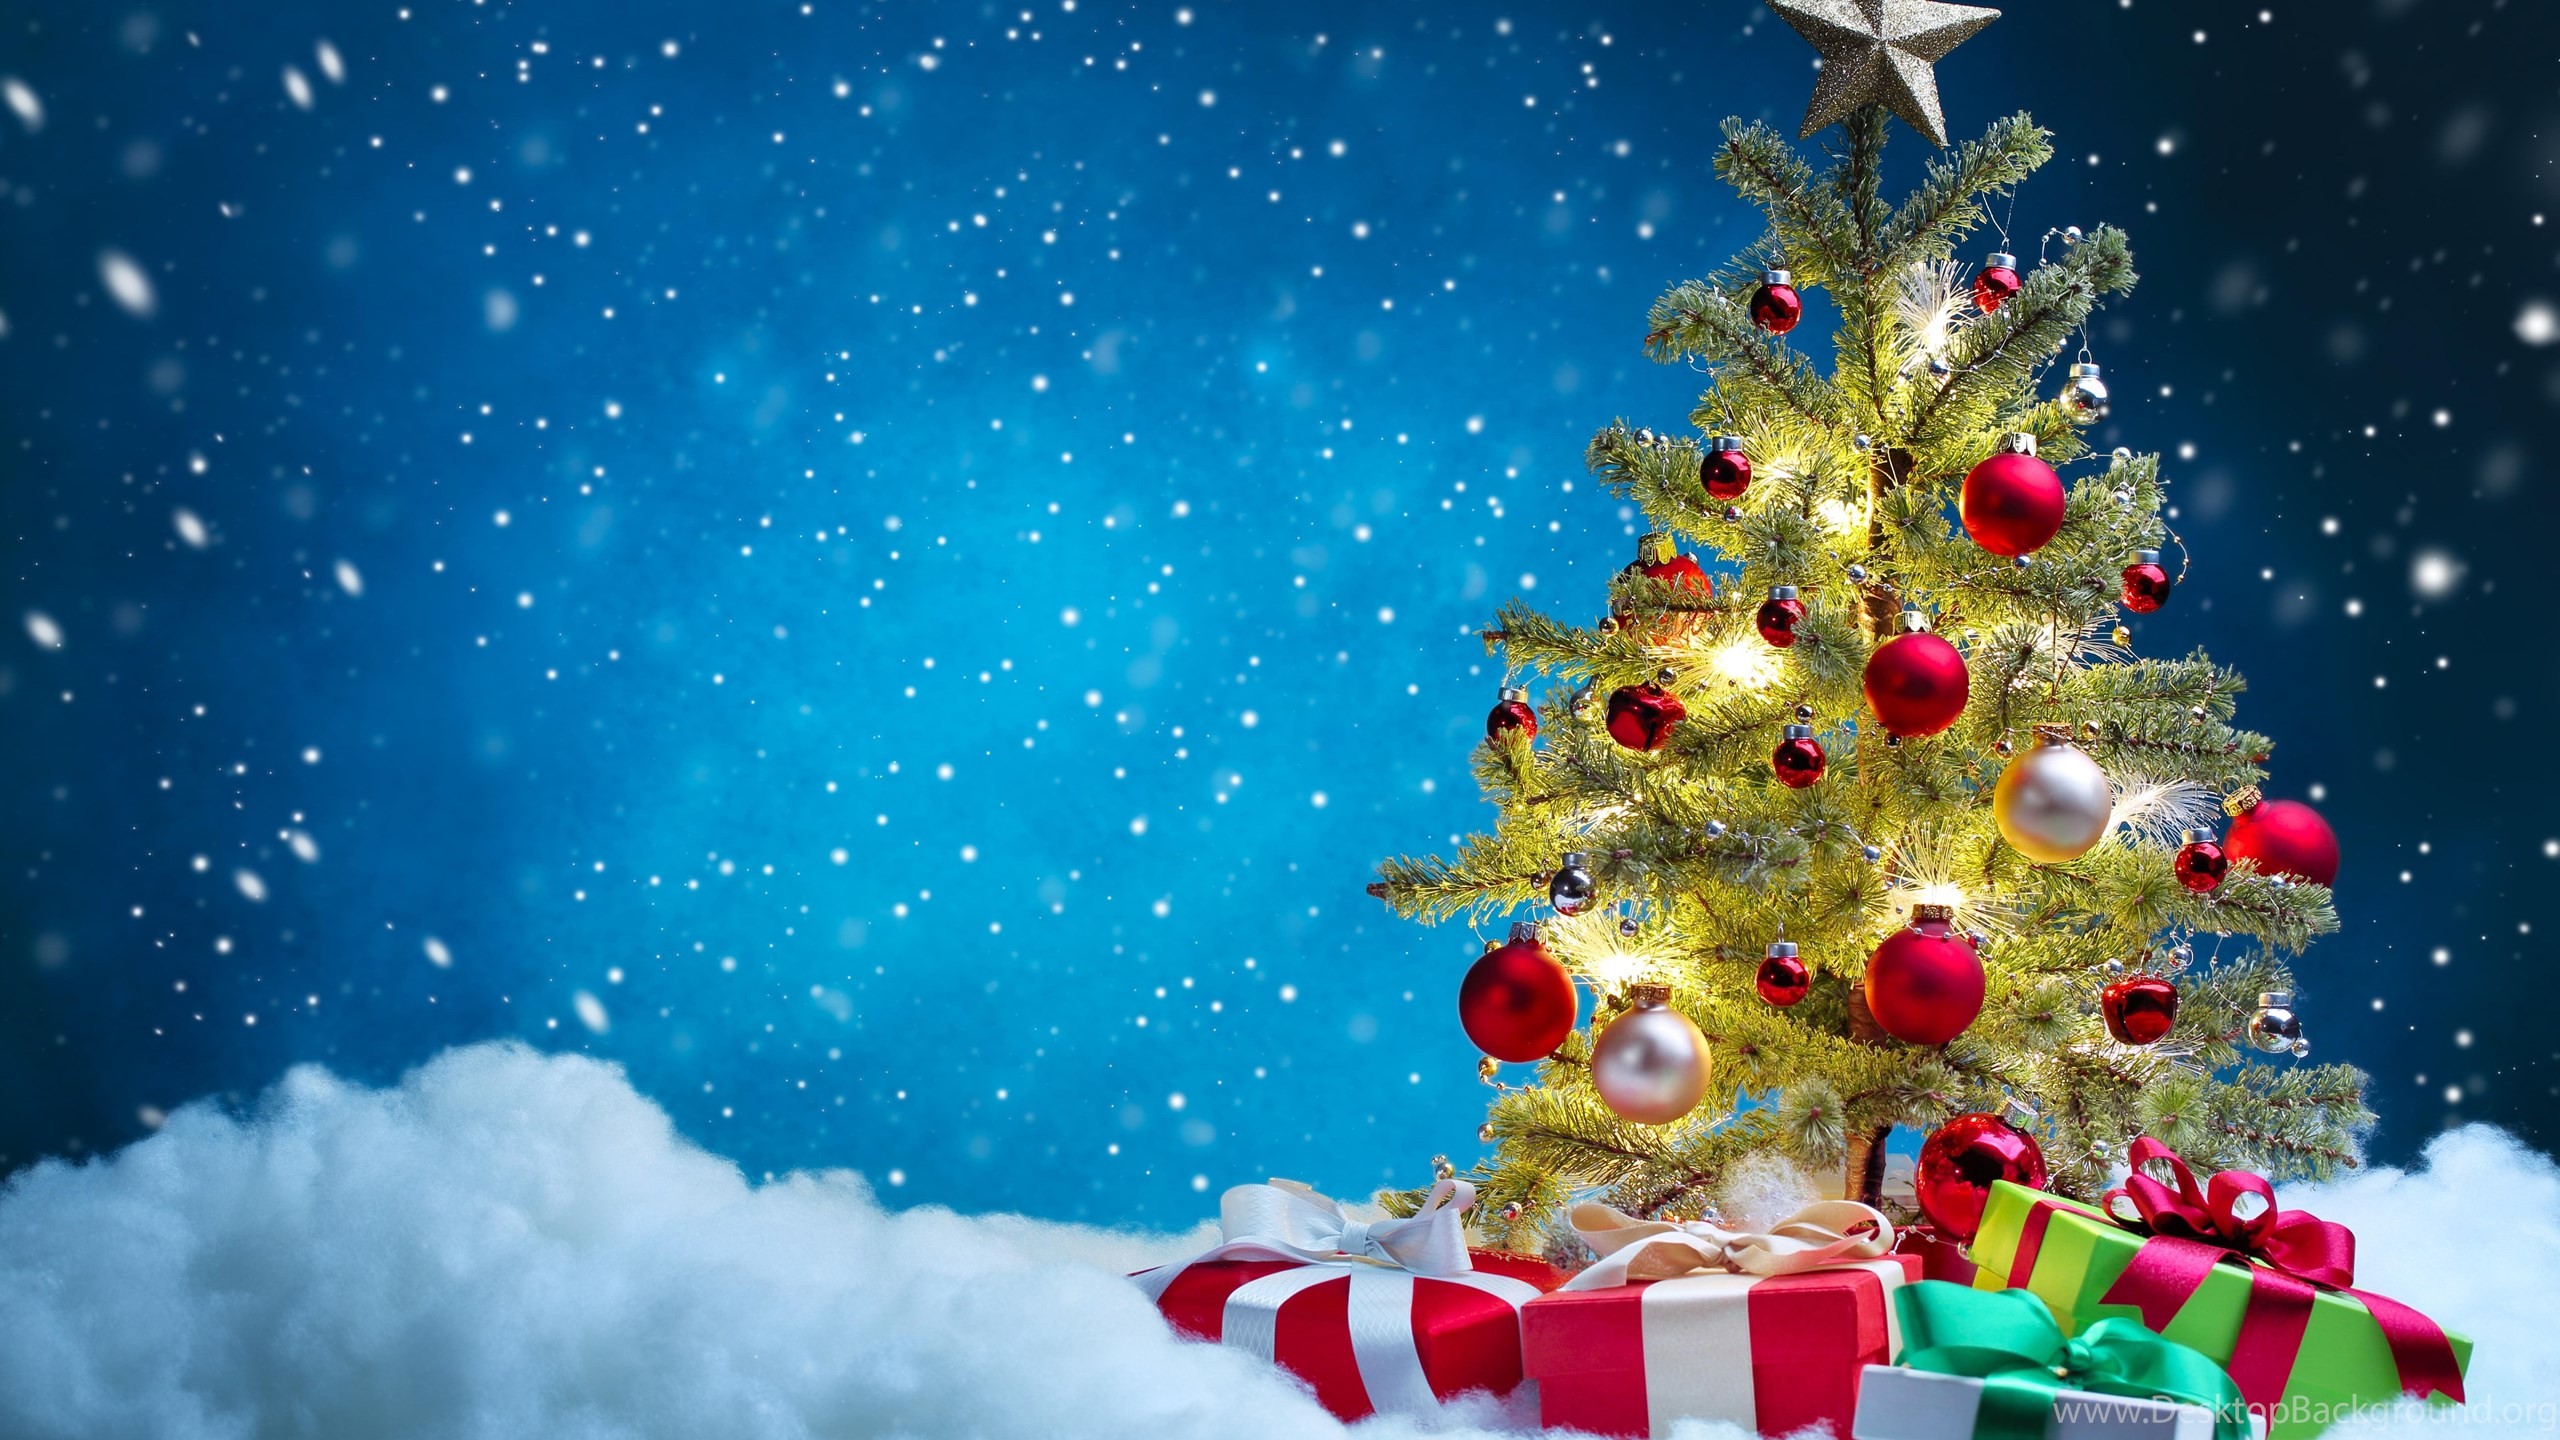 2560x1440 netbook - Christmas Presents Tree Background